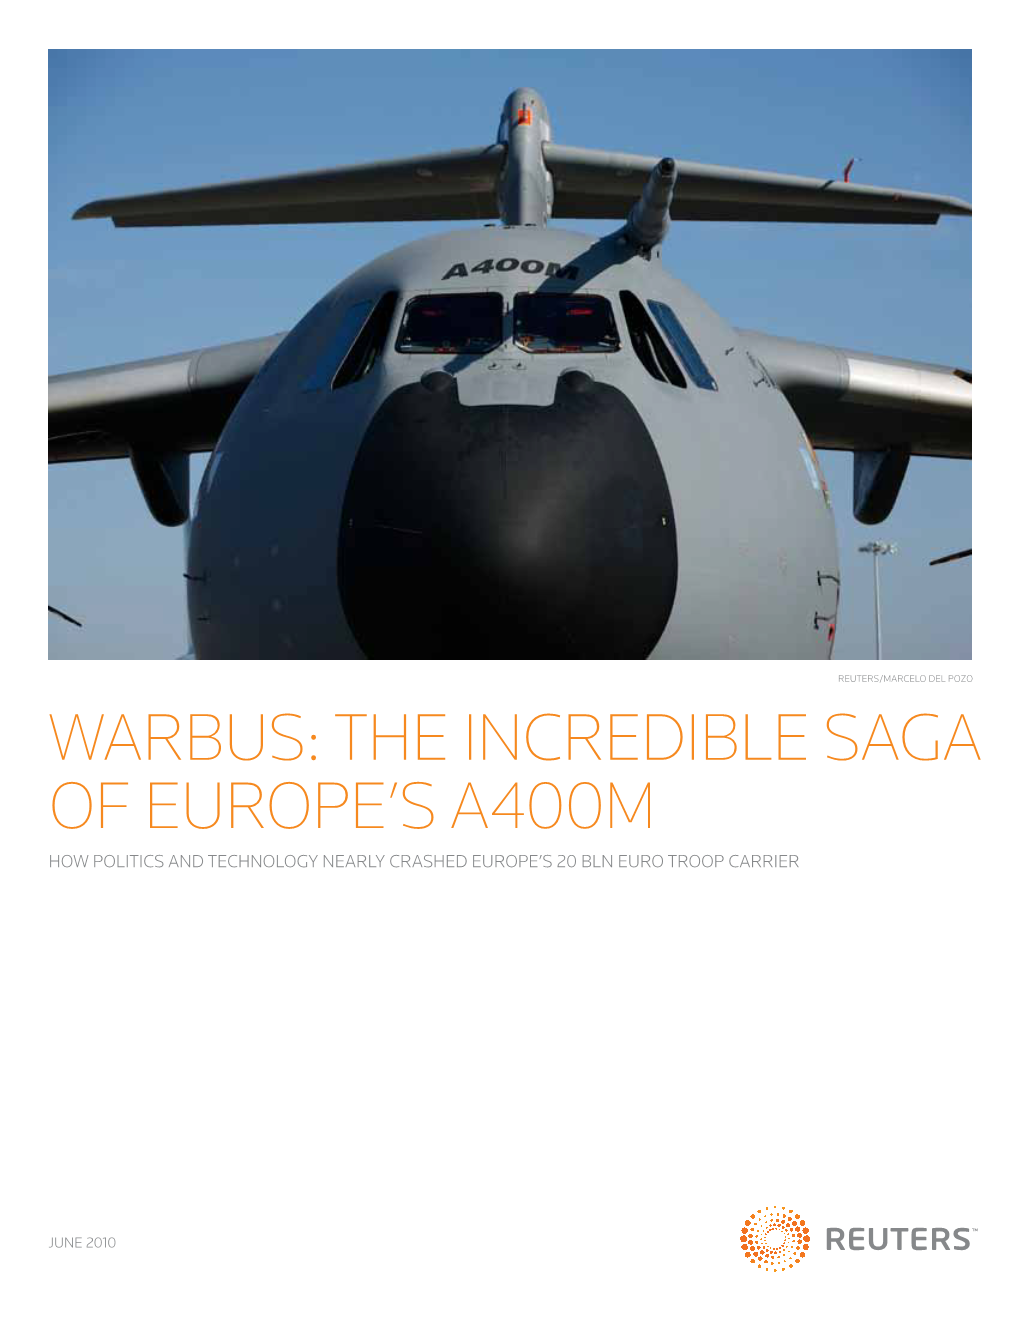 The Incredible Saga of Europe's A400m